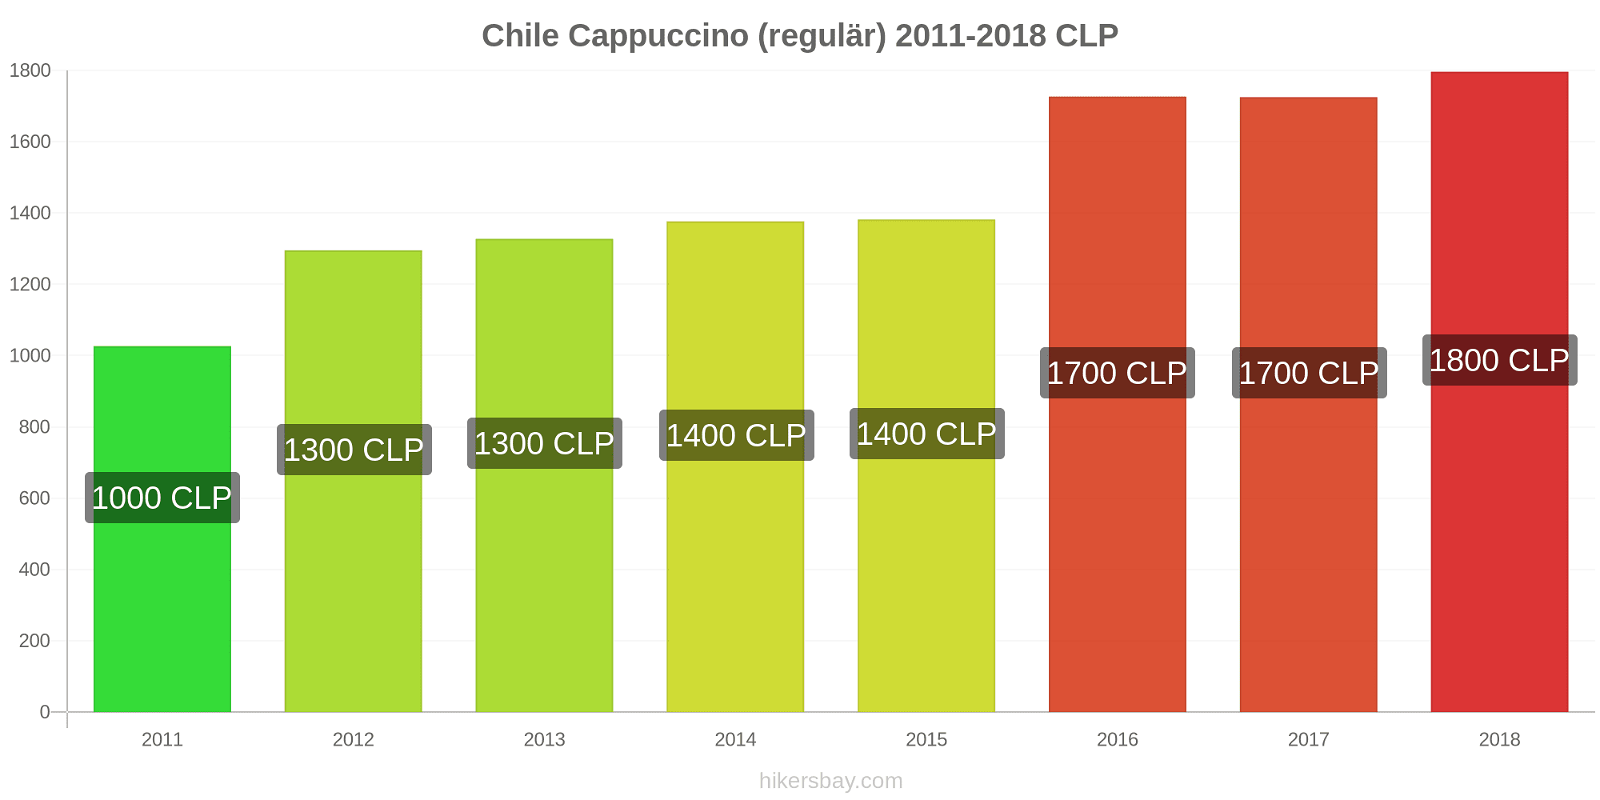 Chile Preisänderungen Cappuccino hikersbay.com